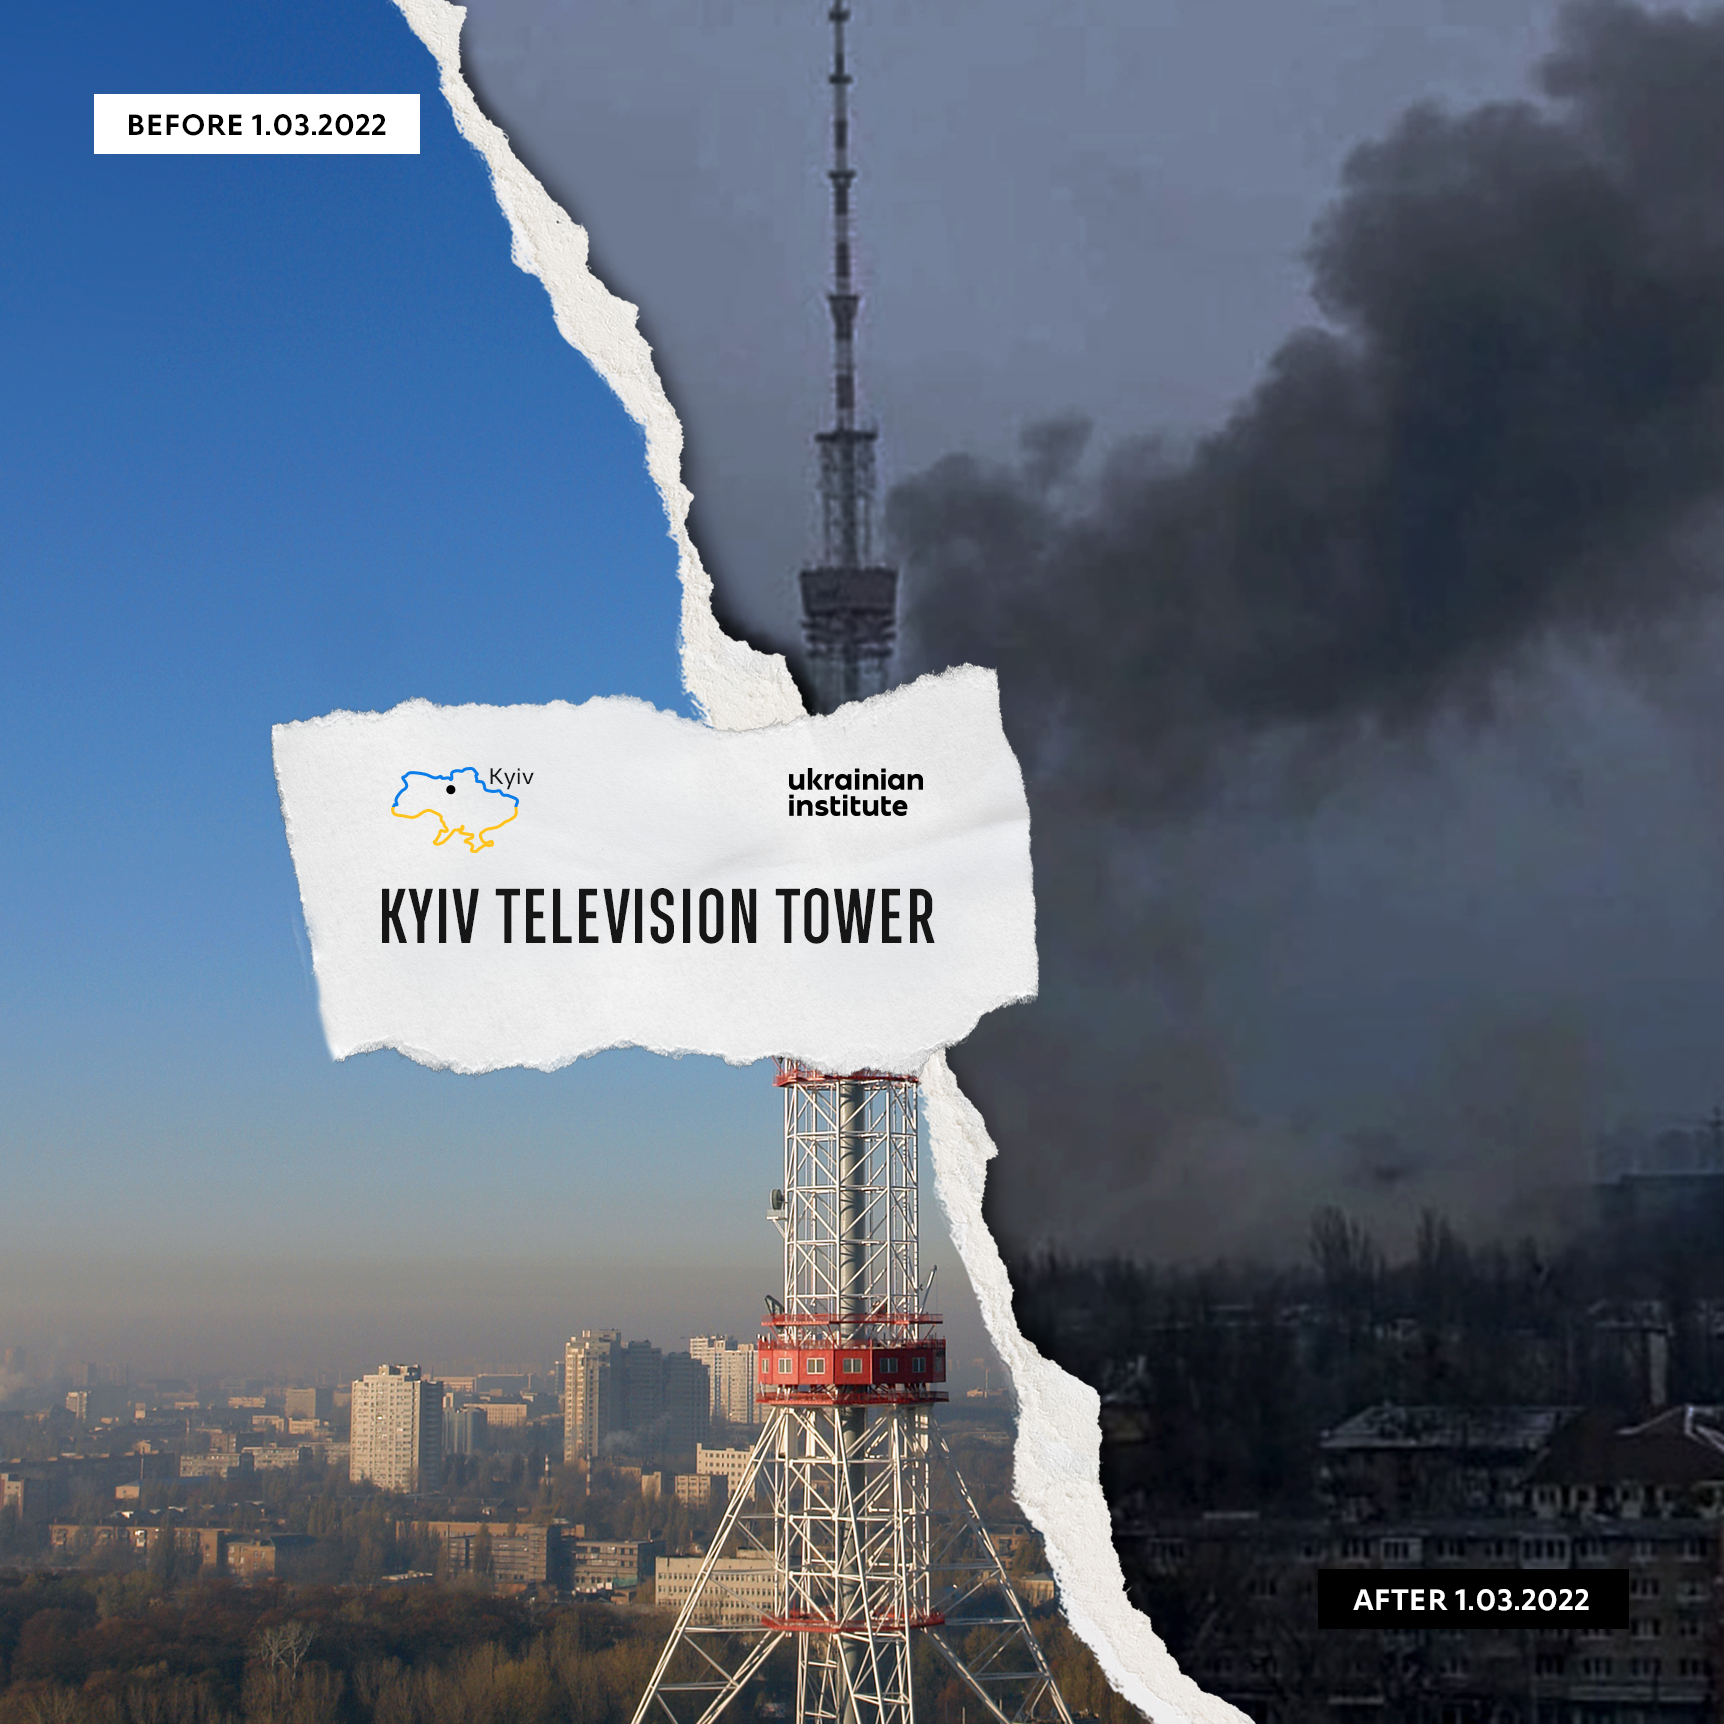 Kyiv television tower